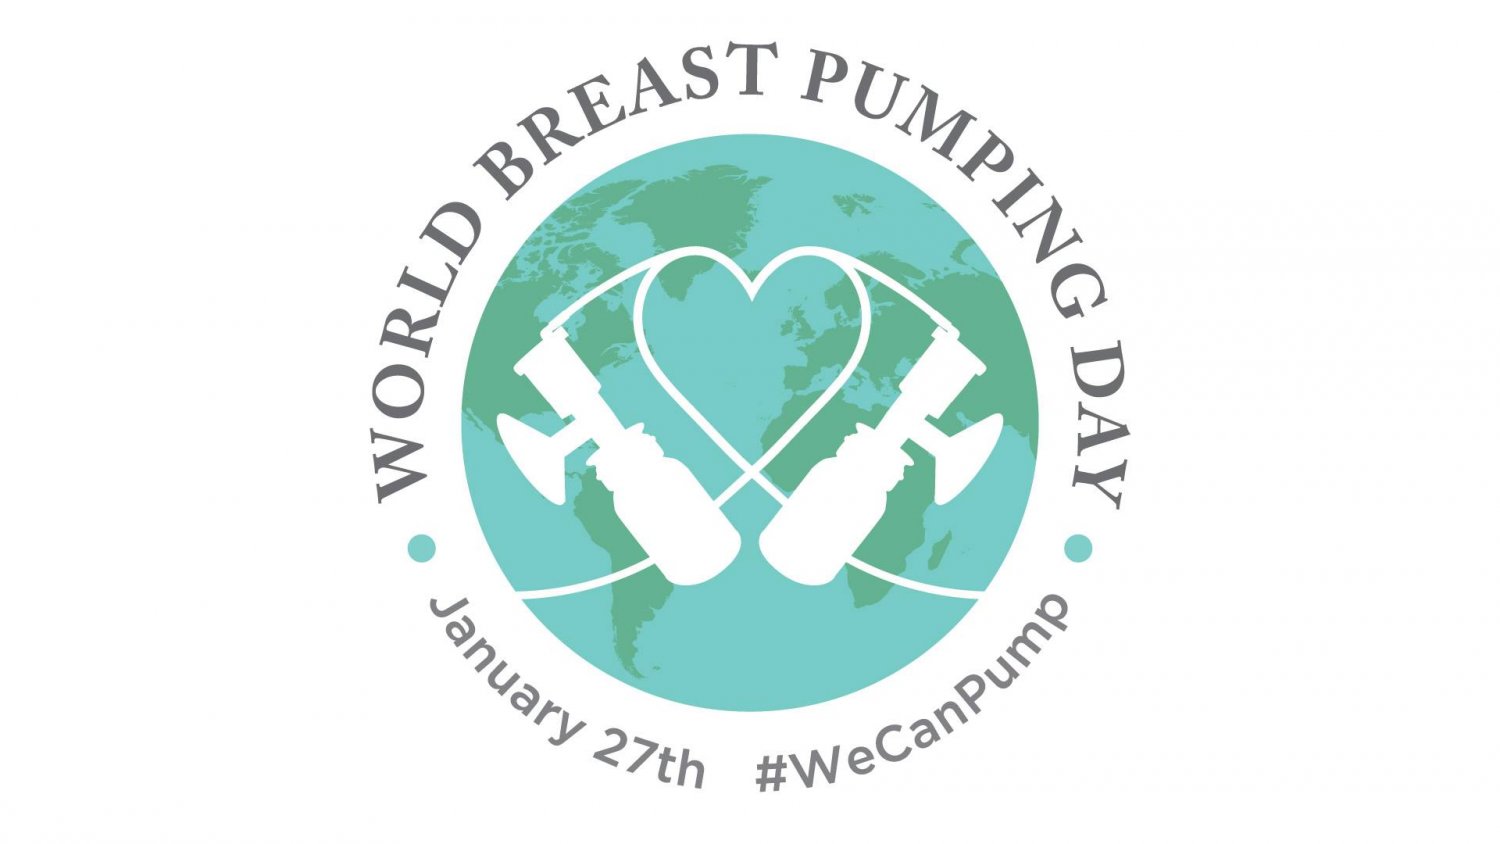 World Breast Pumping Day logo